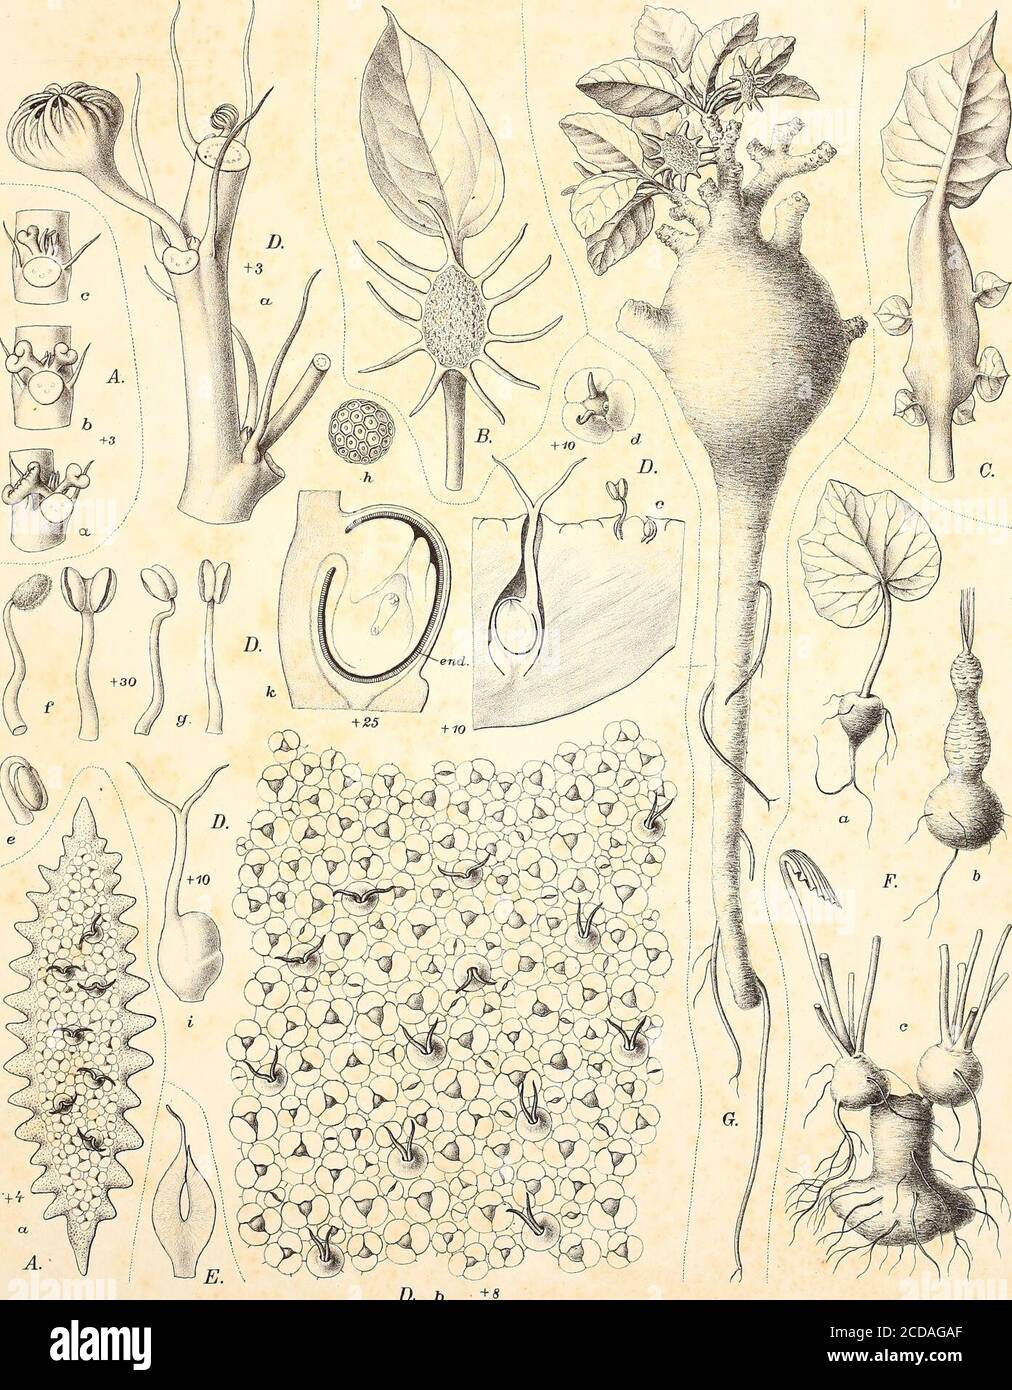 . Monographien afrikanischer Pflanzen-Familien und -Gattungen . reus P. Beauv. 37, 38, 39 Abb. 3, 45, Taf. XVI M. cuneifolius Engl. 37, 40, Taf. XVII D. M. gracilis Engl. 37, 39, Taf. XVII B. M. Holstii Engl. 37, 41, Taf. XVII E. M. Preussii Engl. 37, 40, Taf. XVII A. M. serratus (Trec.) Benth. Et Hook. f. 3 40, 45, Taf. XVII C. Myriopeltis edulis Welw. 32. Nothodorstenia Engl. 10, 12, 47, 48.Pseudotreculia Baill. 31, 33, 45. 46, Scypkosyce Baill. 2, 30 S. Manniana Baill. 30. S. Zenkeri Engl. 31, Taf. X 18. 48. Treculia Decne. 2, 31, 45,T. acuminata Baill. 32, 34.T. africana Decne. 31, 32, 45 Stockfoto